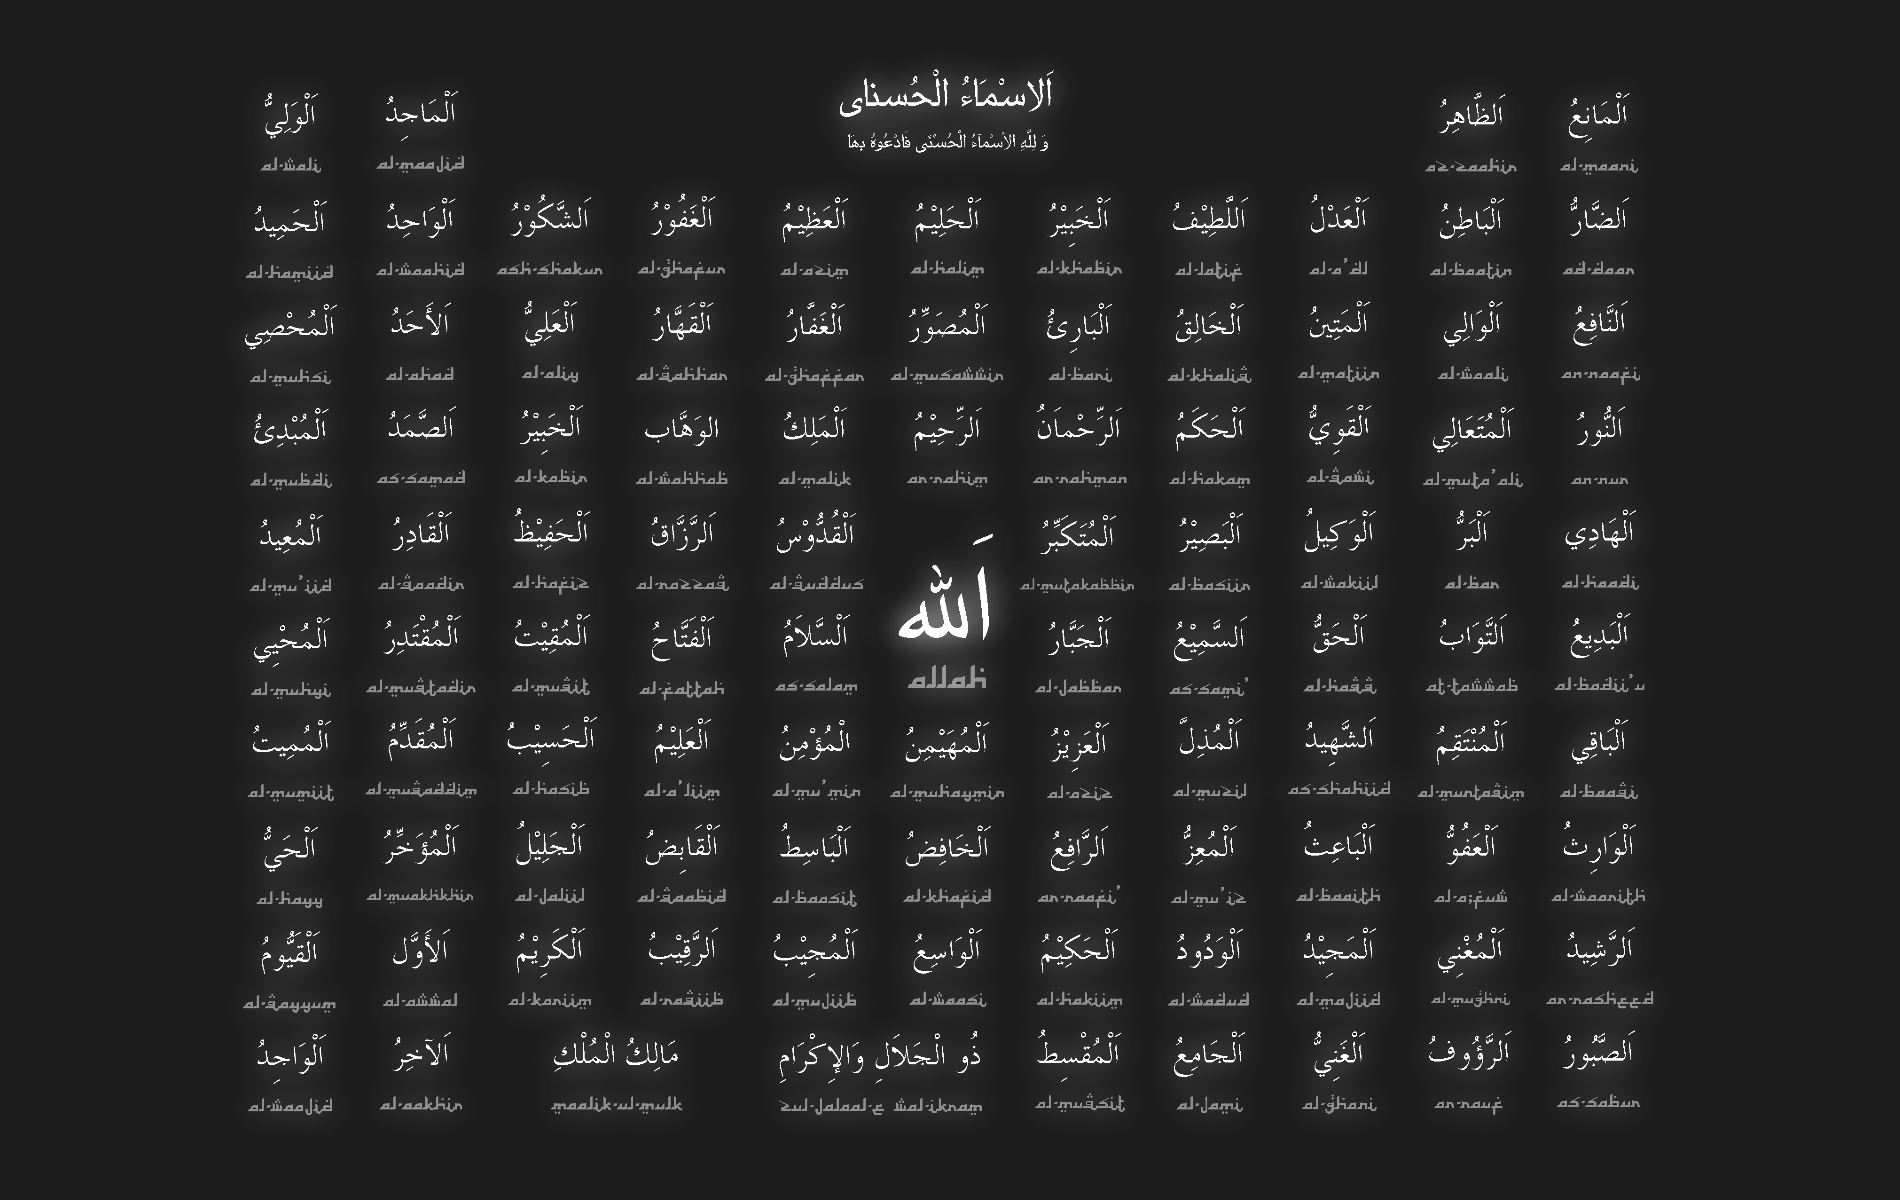 99 Names of Muhammad PBUH #Wallpaper - HD Backgrounds